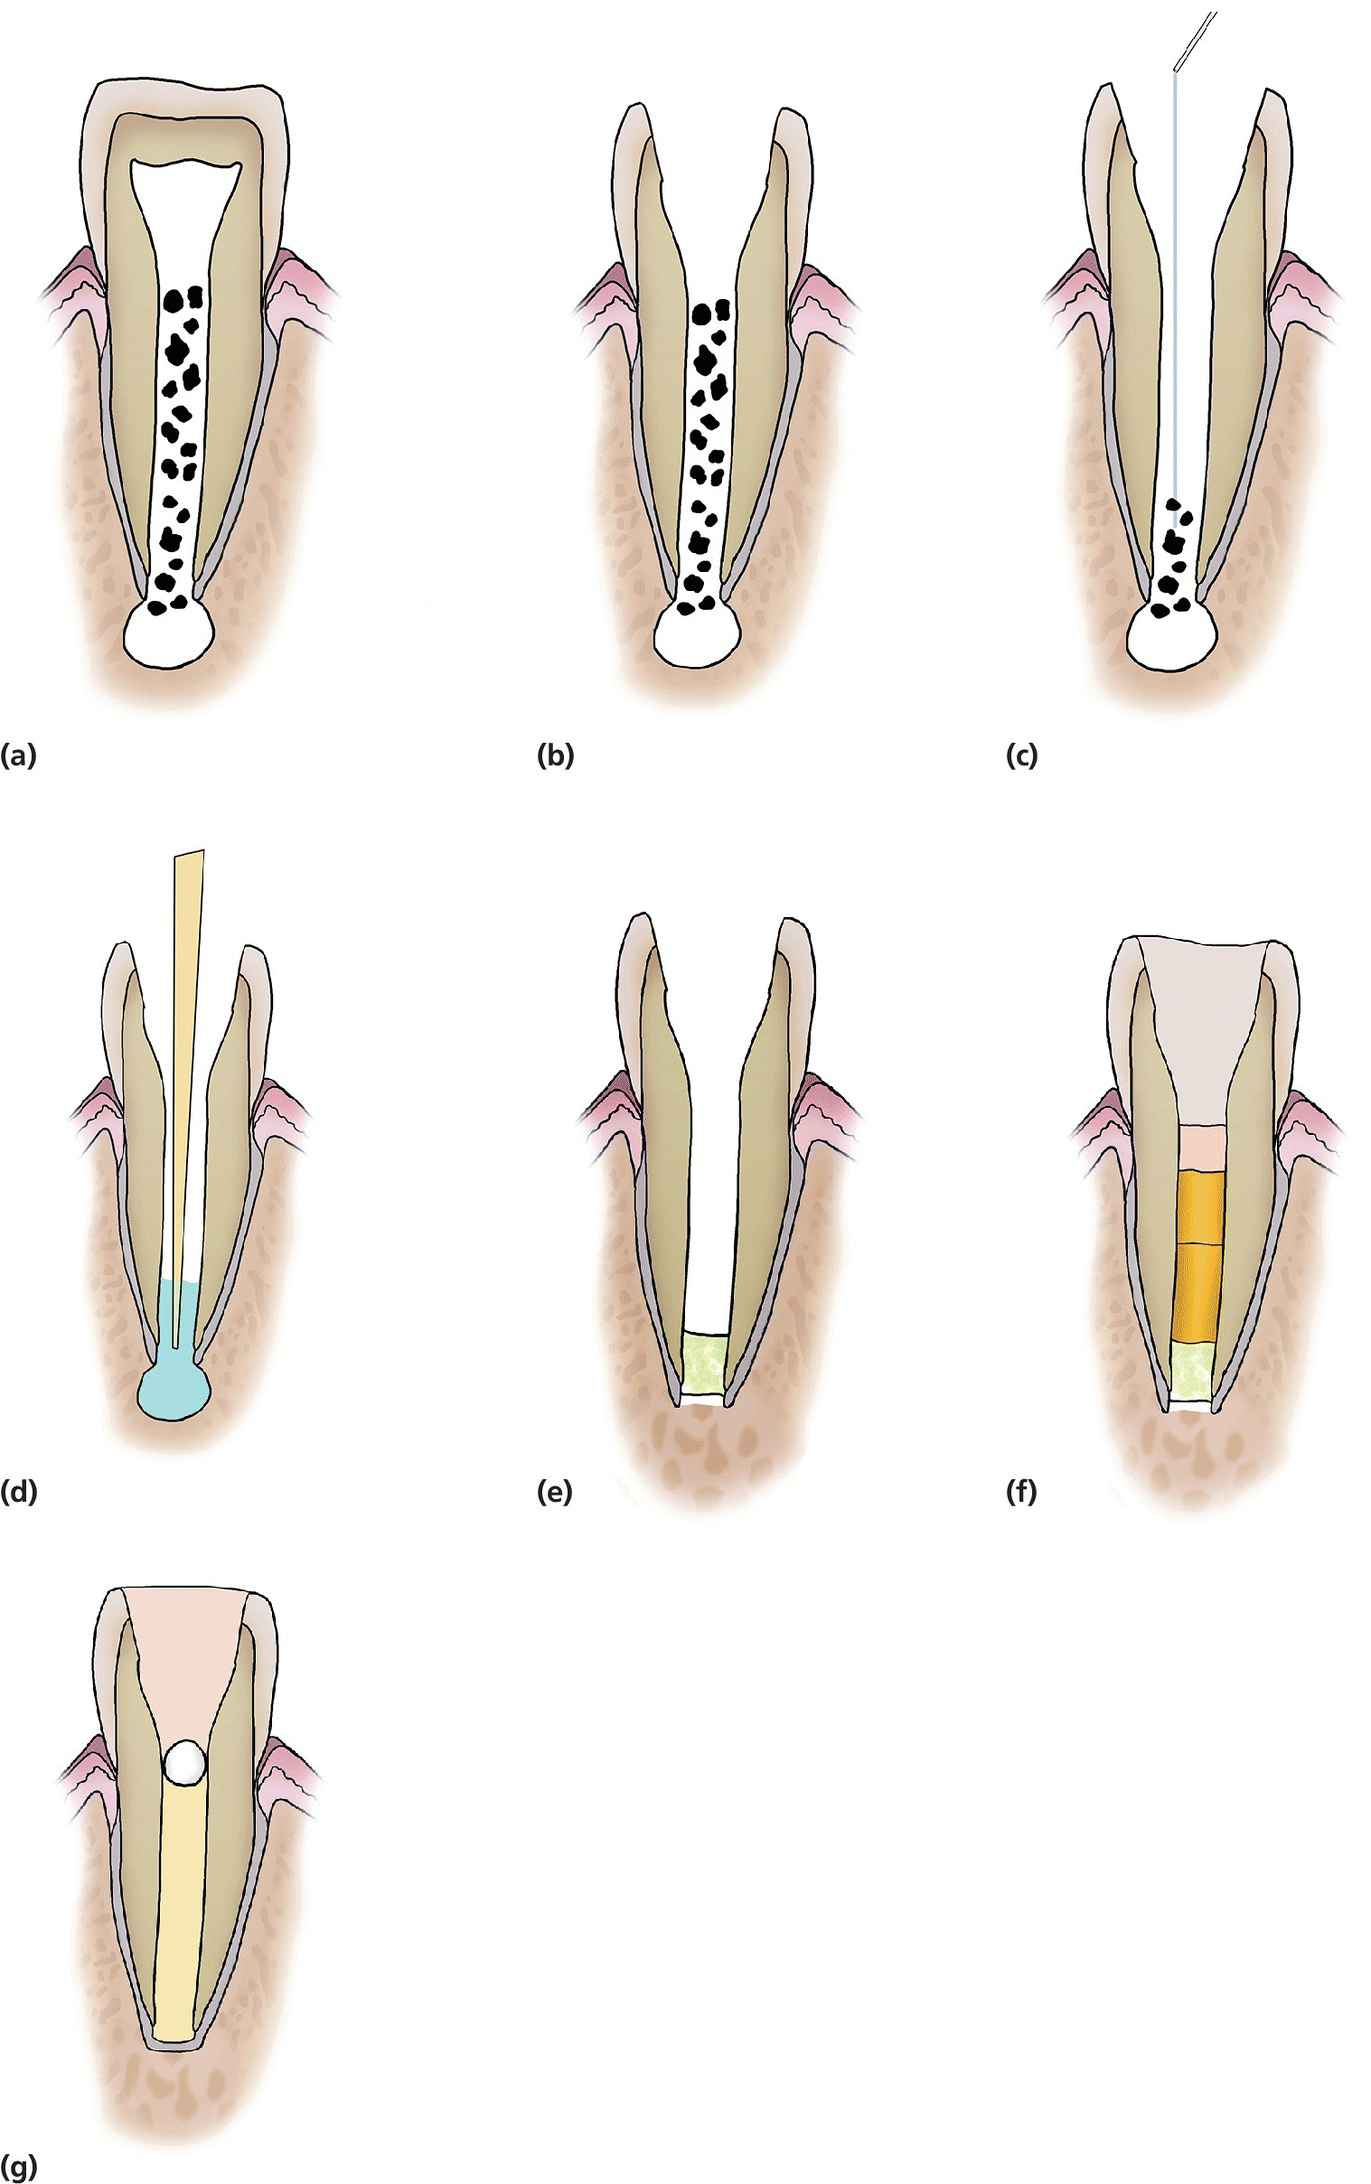 Diagrammatic representation of MTA plug and thermal guttapercha obturation of immature teeth.